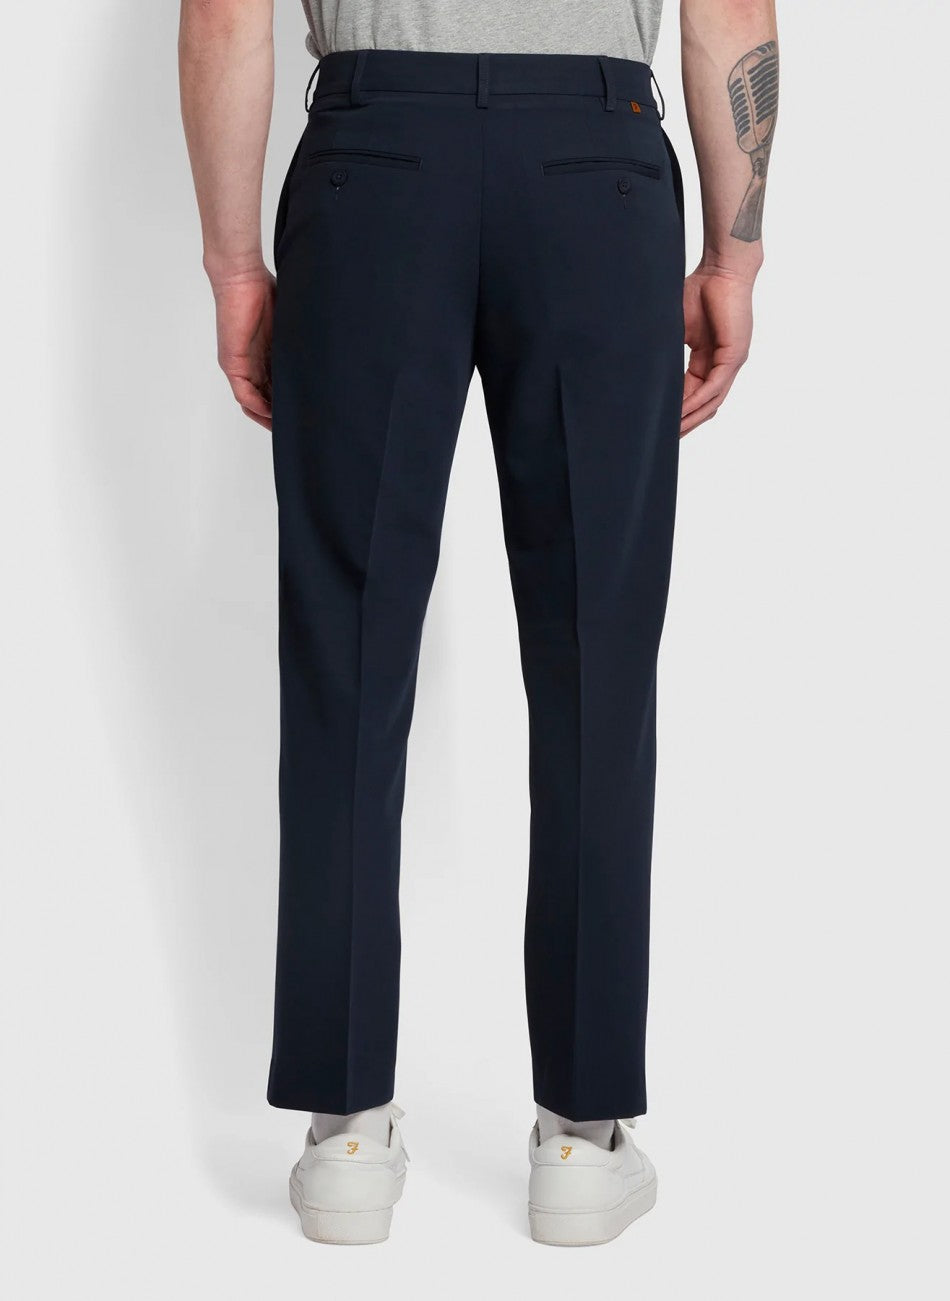 Farah Platinum Mens Olive Tan Trousers Pockets Wool Blend Clasp Front W42  L30 : สำนักงานสิทธิประโยชน์ มหาวิทยาลัยรังสิต